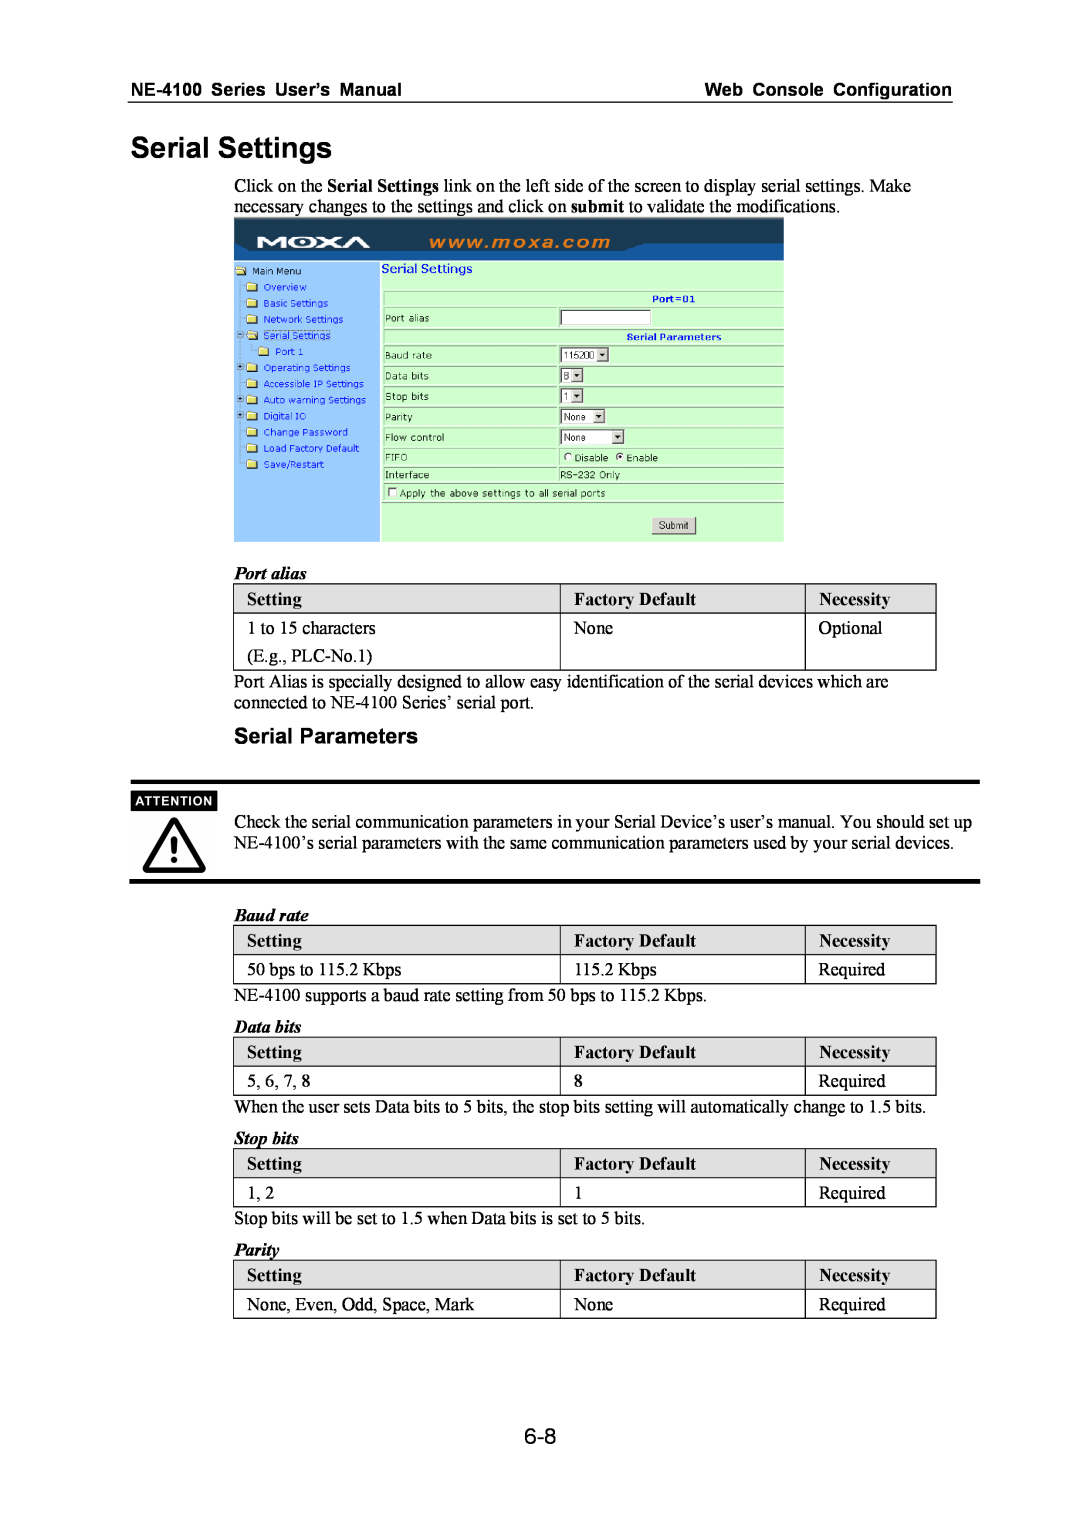 Moxa Technologies Serial Settings, Serial Parameters, NE-4100 Series User’s Manual, Web Console Configuration, Parity 